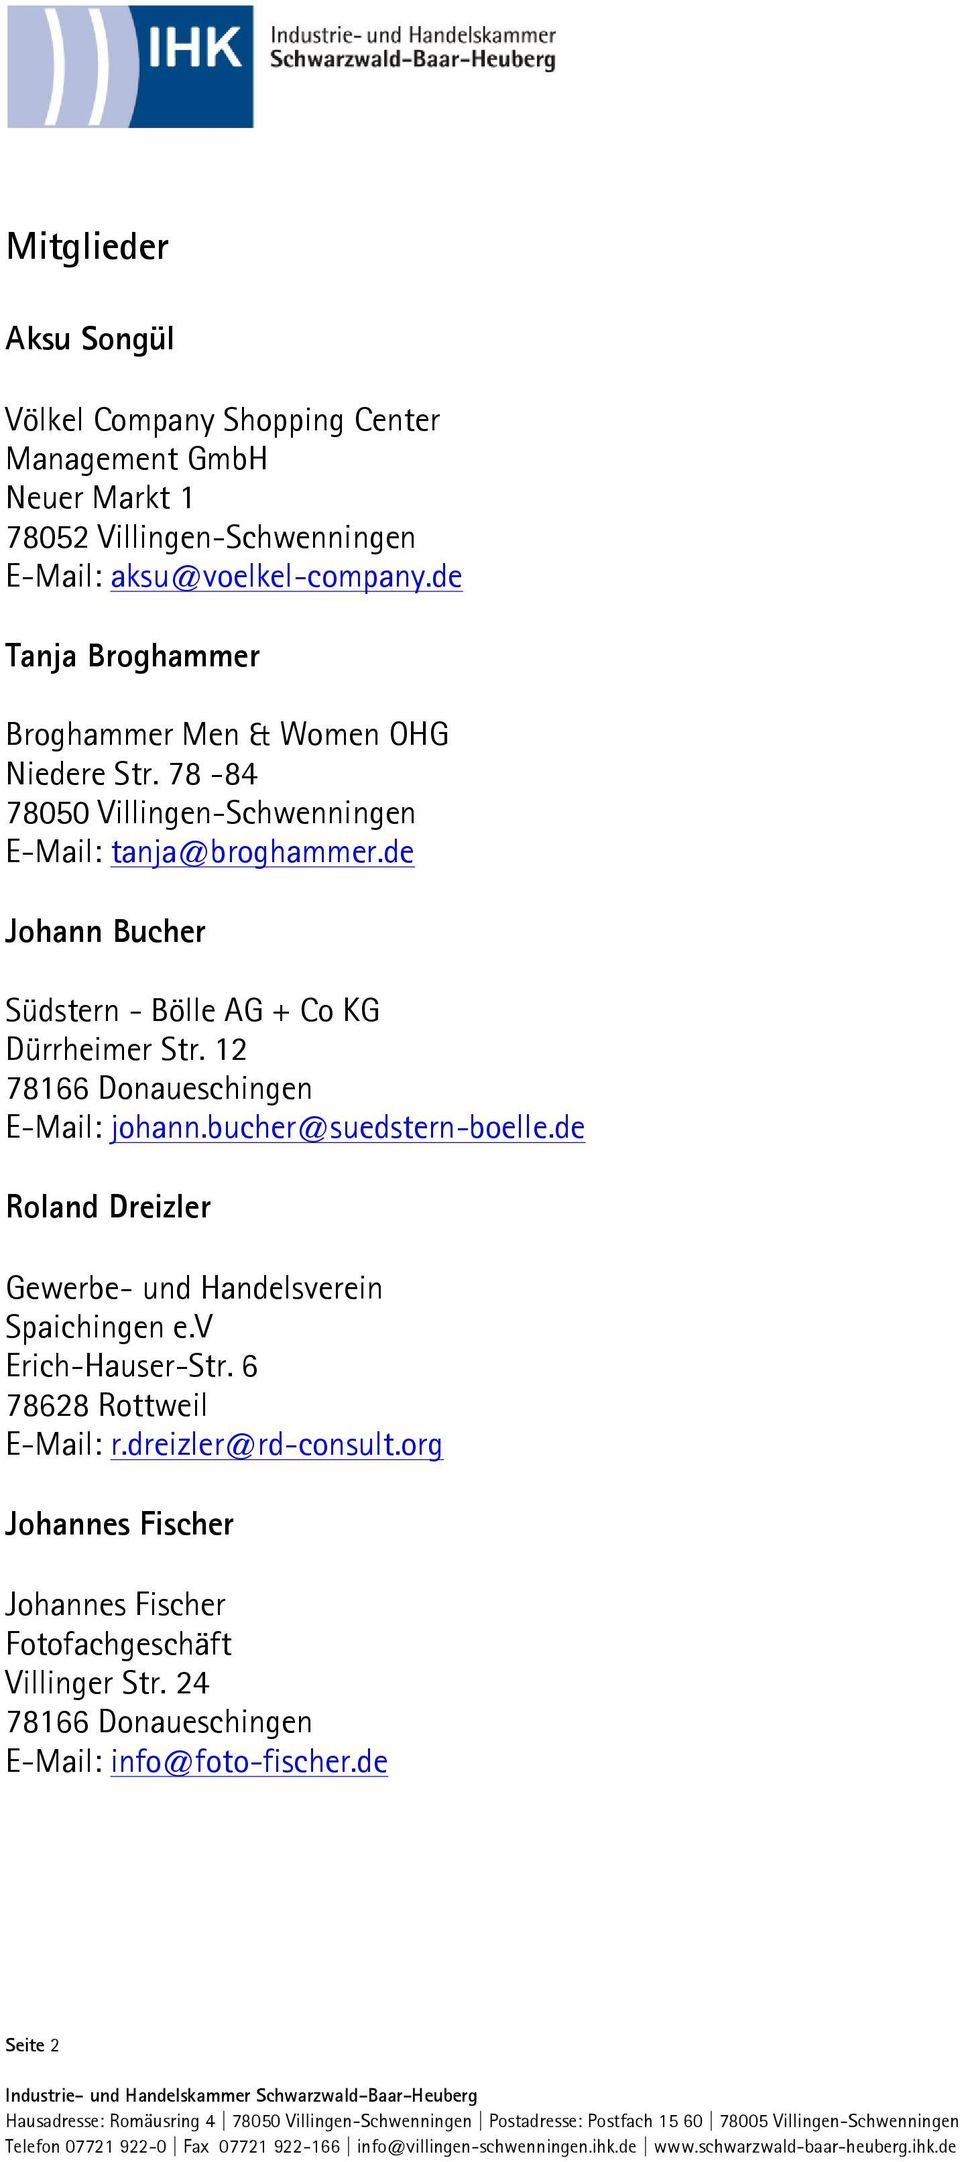 de Johann Bucher Südstern - Bölle AG + Co KG Dürrheimer Str. 12 E-Mail: johann.bucher@suedstern-boelle.